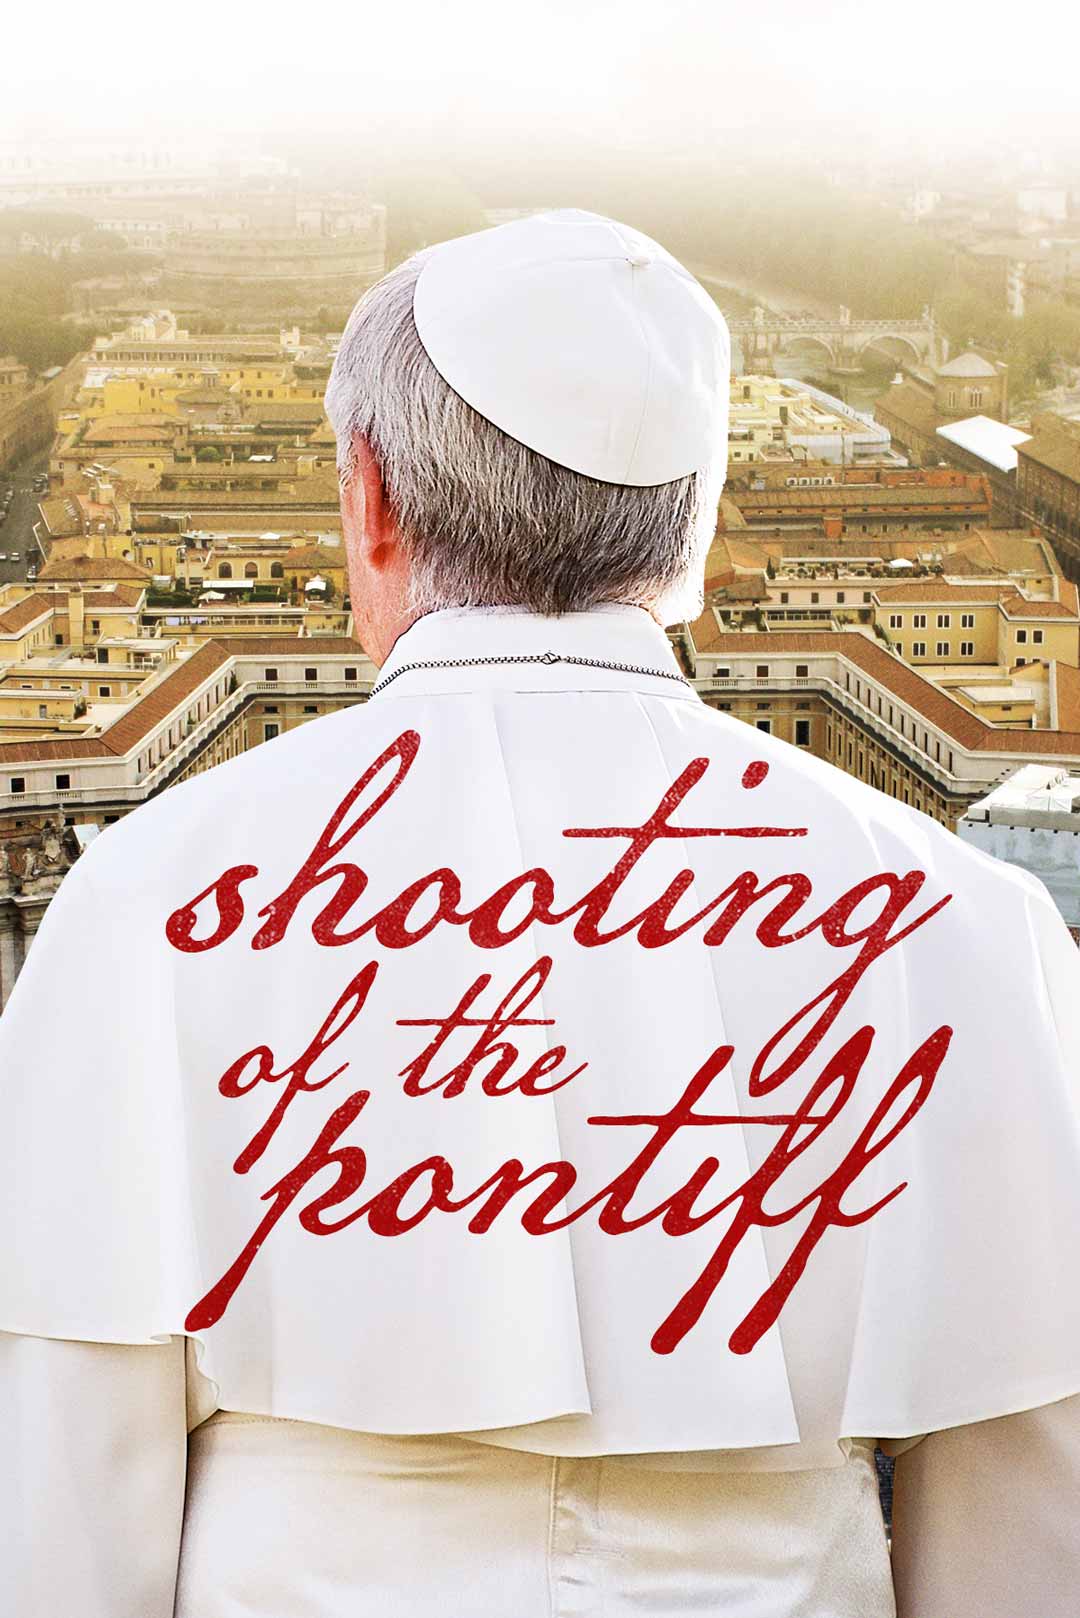 Shooting Of The Pontiff